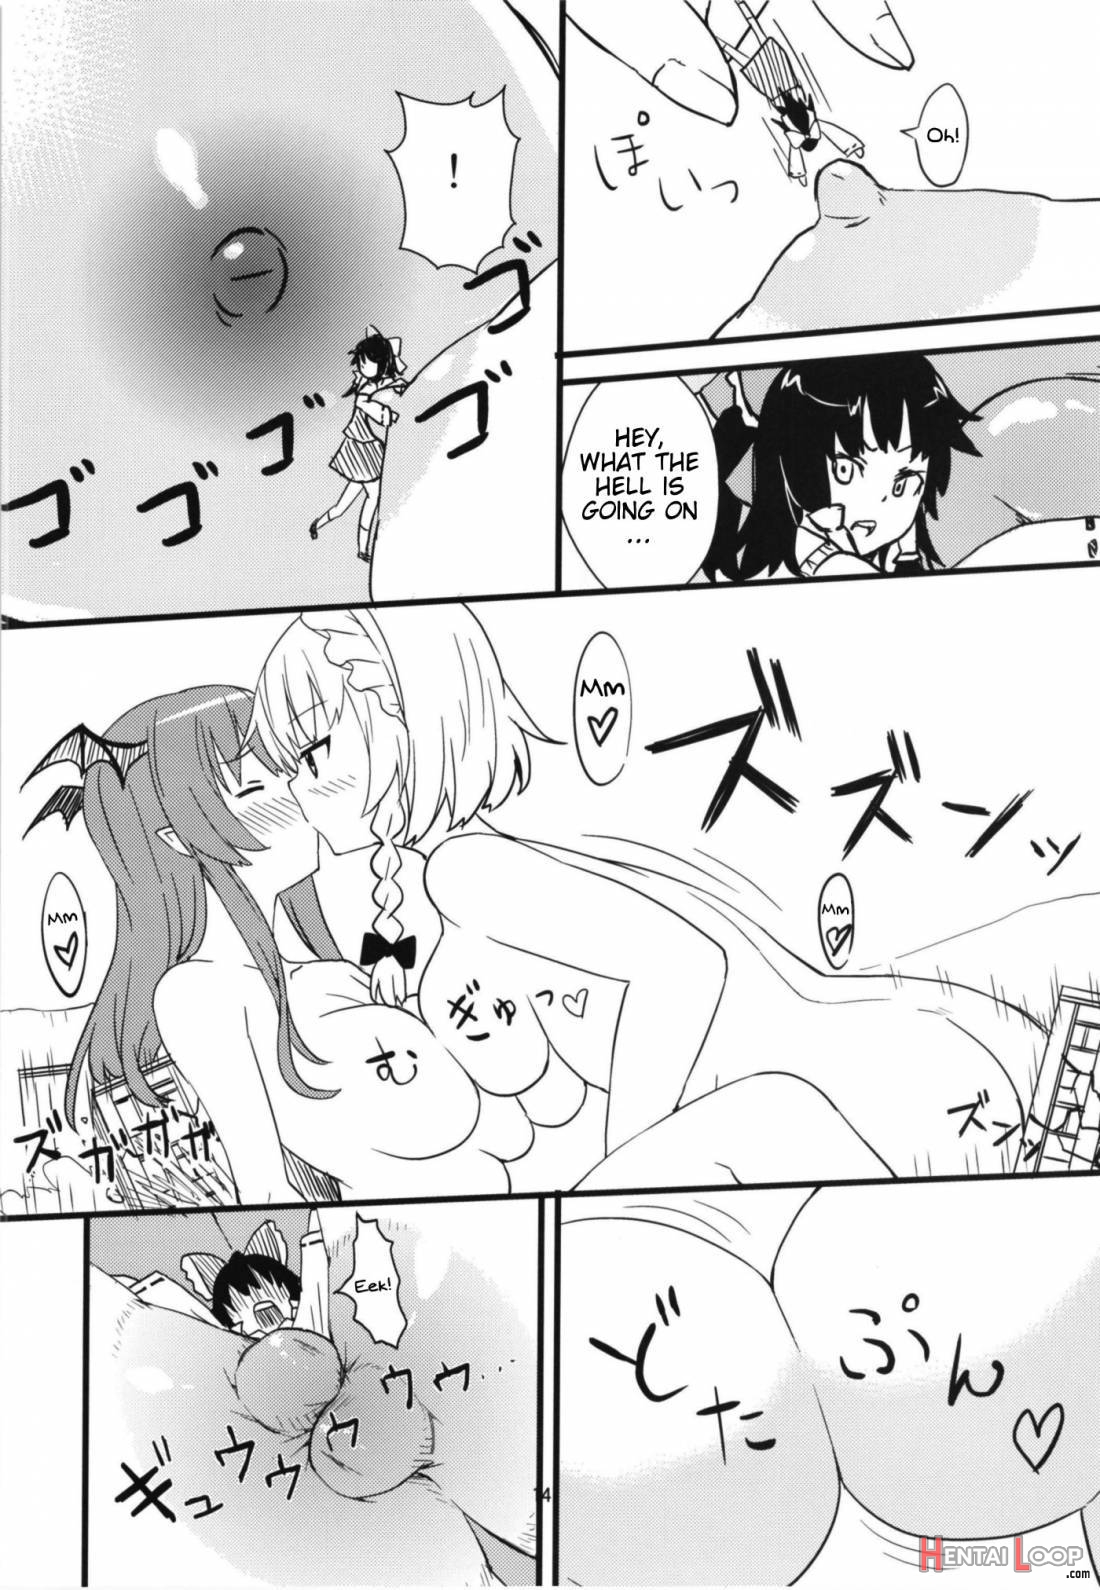 Mega Sakuya vs Giant Koakuma page 13